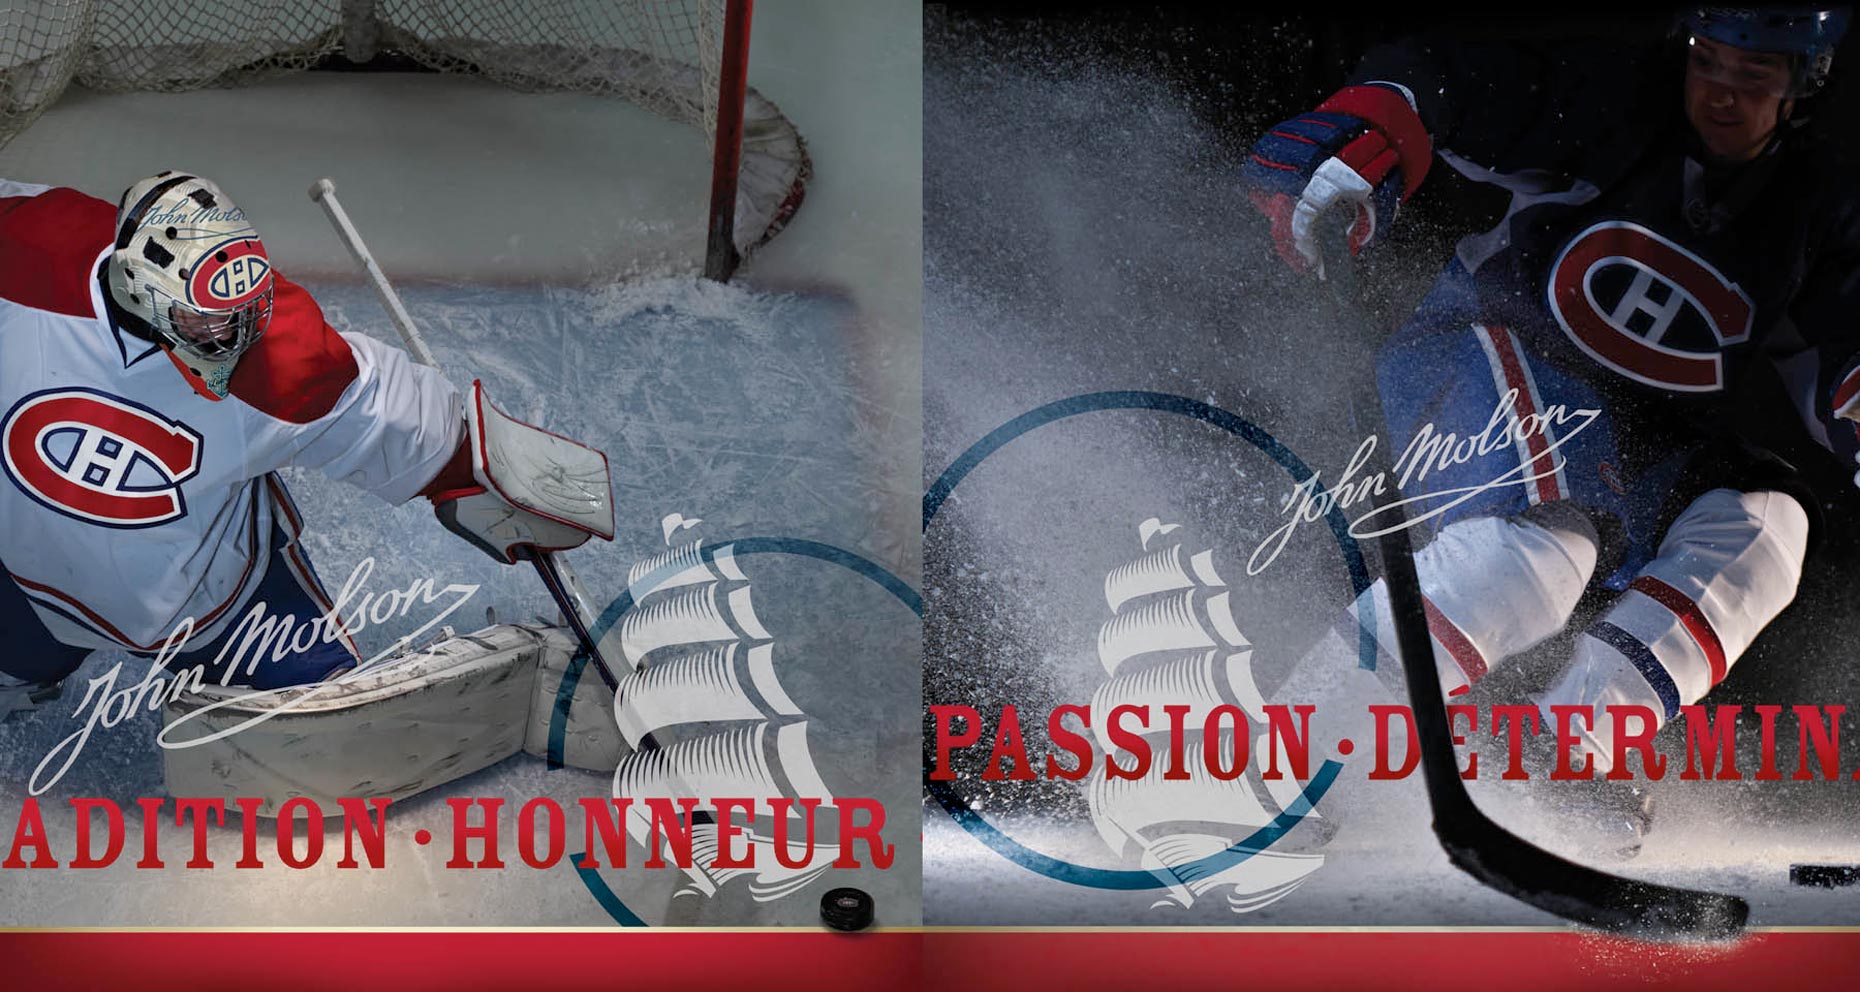 molson hockey ads photo by Monte Isom